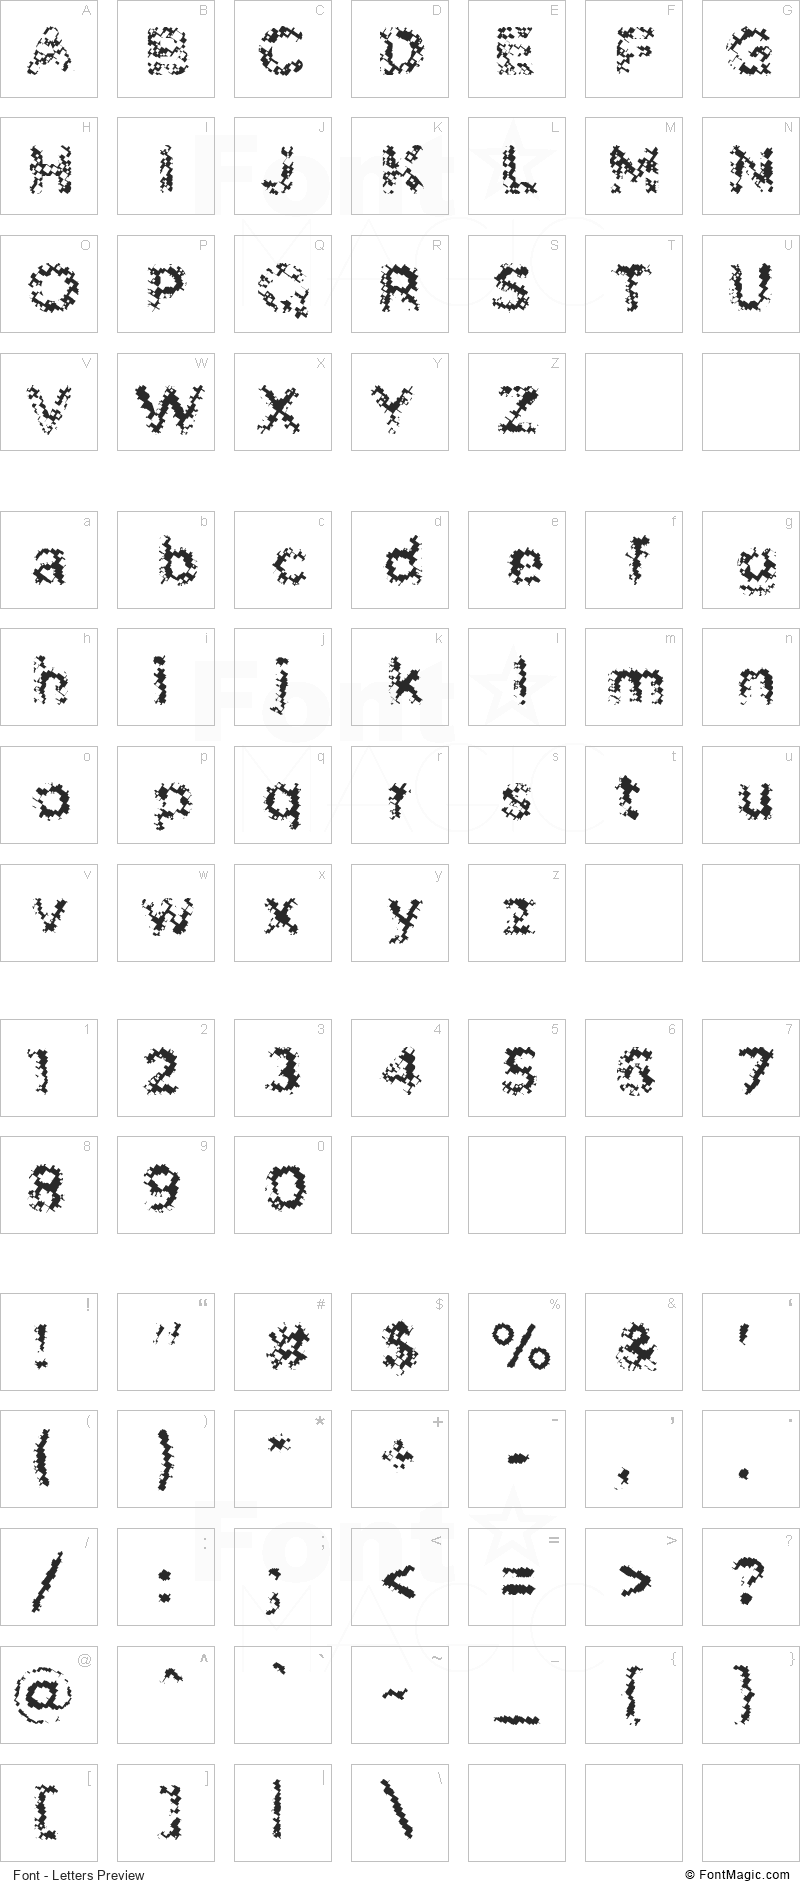 Pabellona (C) Tríplex Font - All Latters Preview Chart